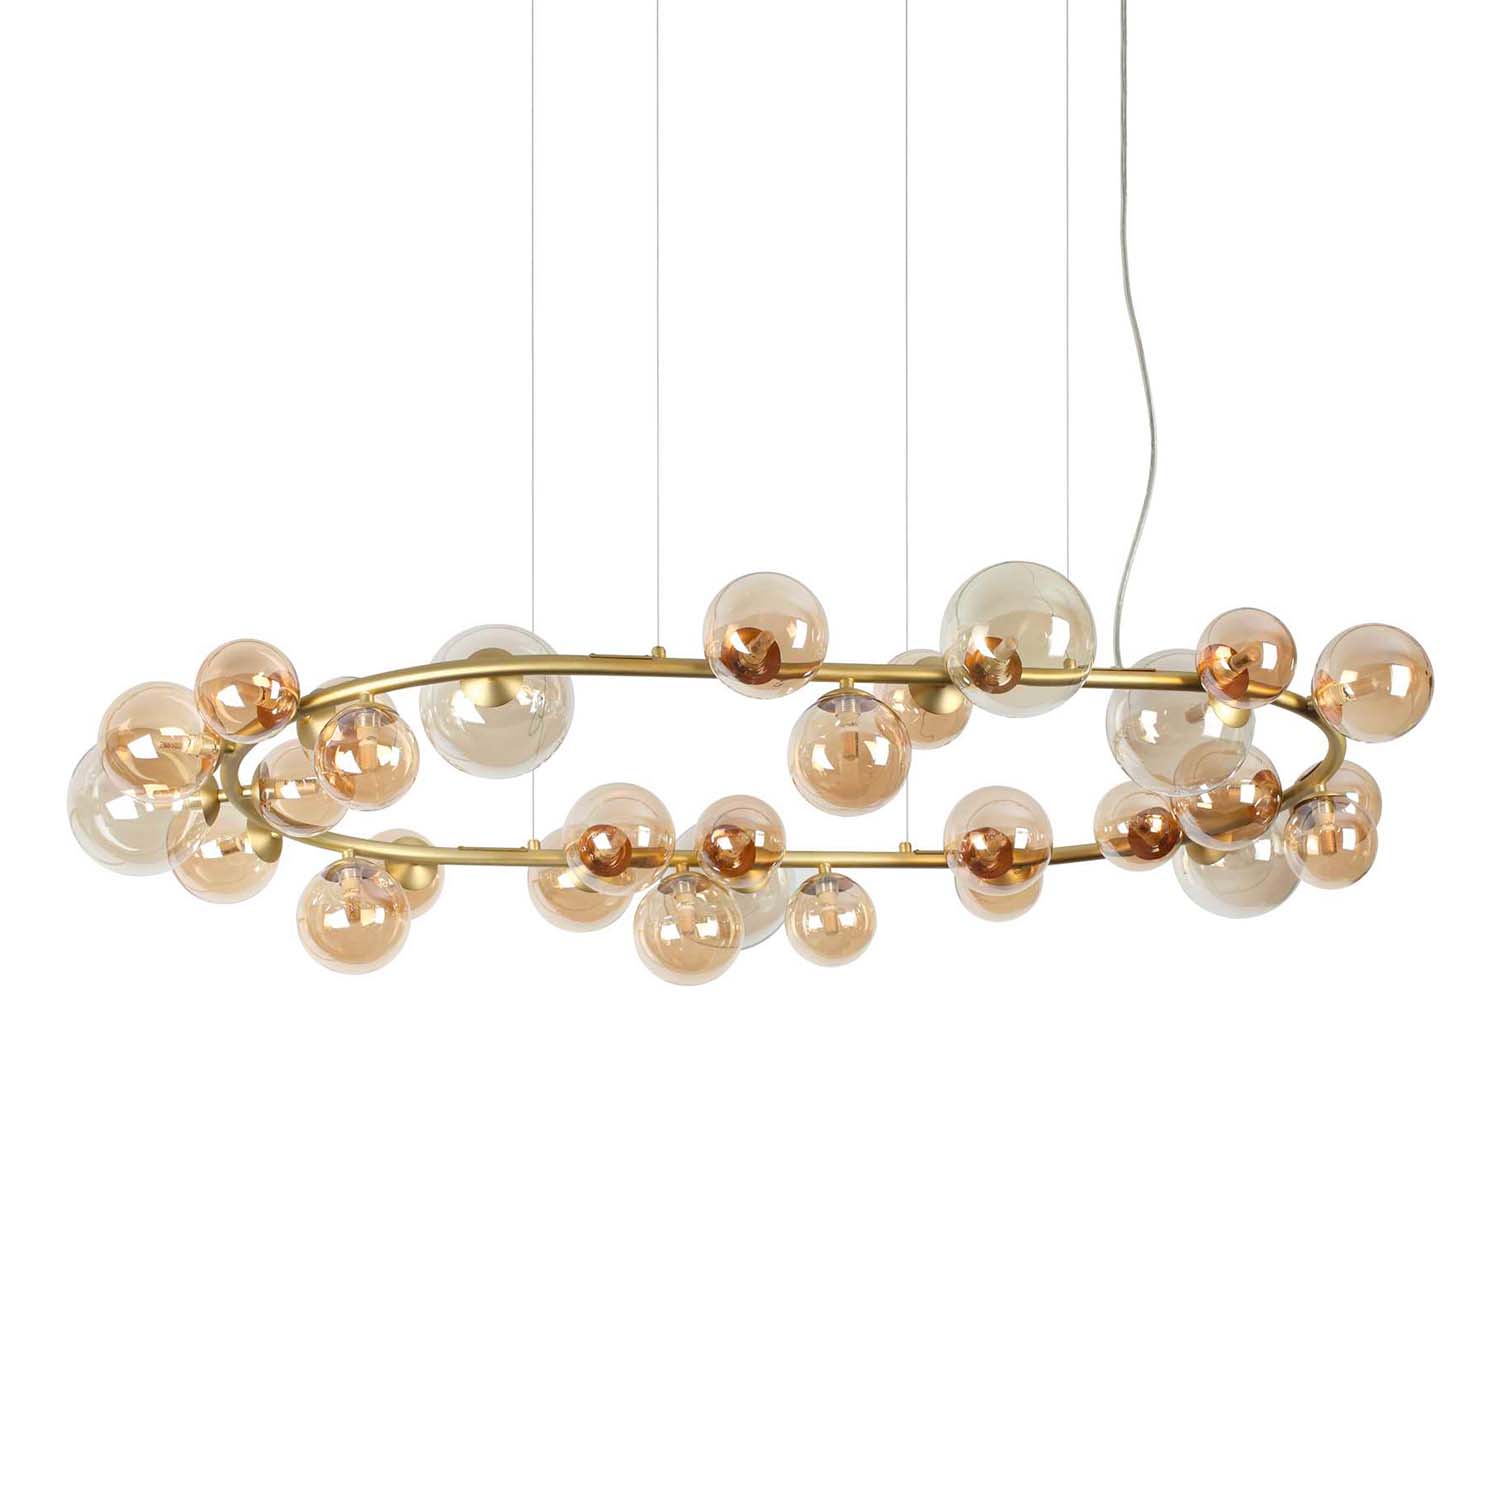 PERLAGE - Oval art deco pendant light with glass balls